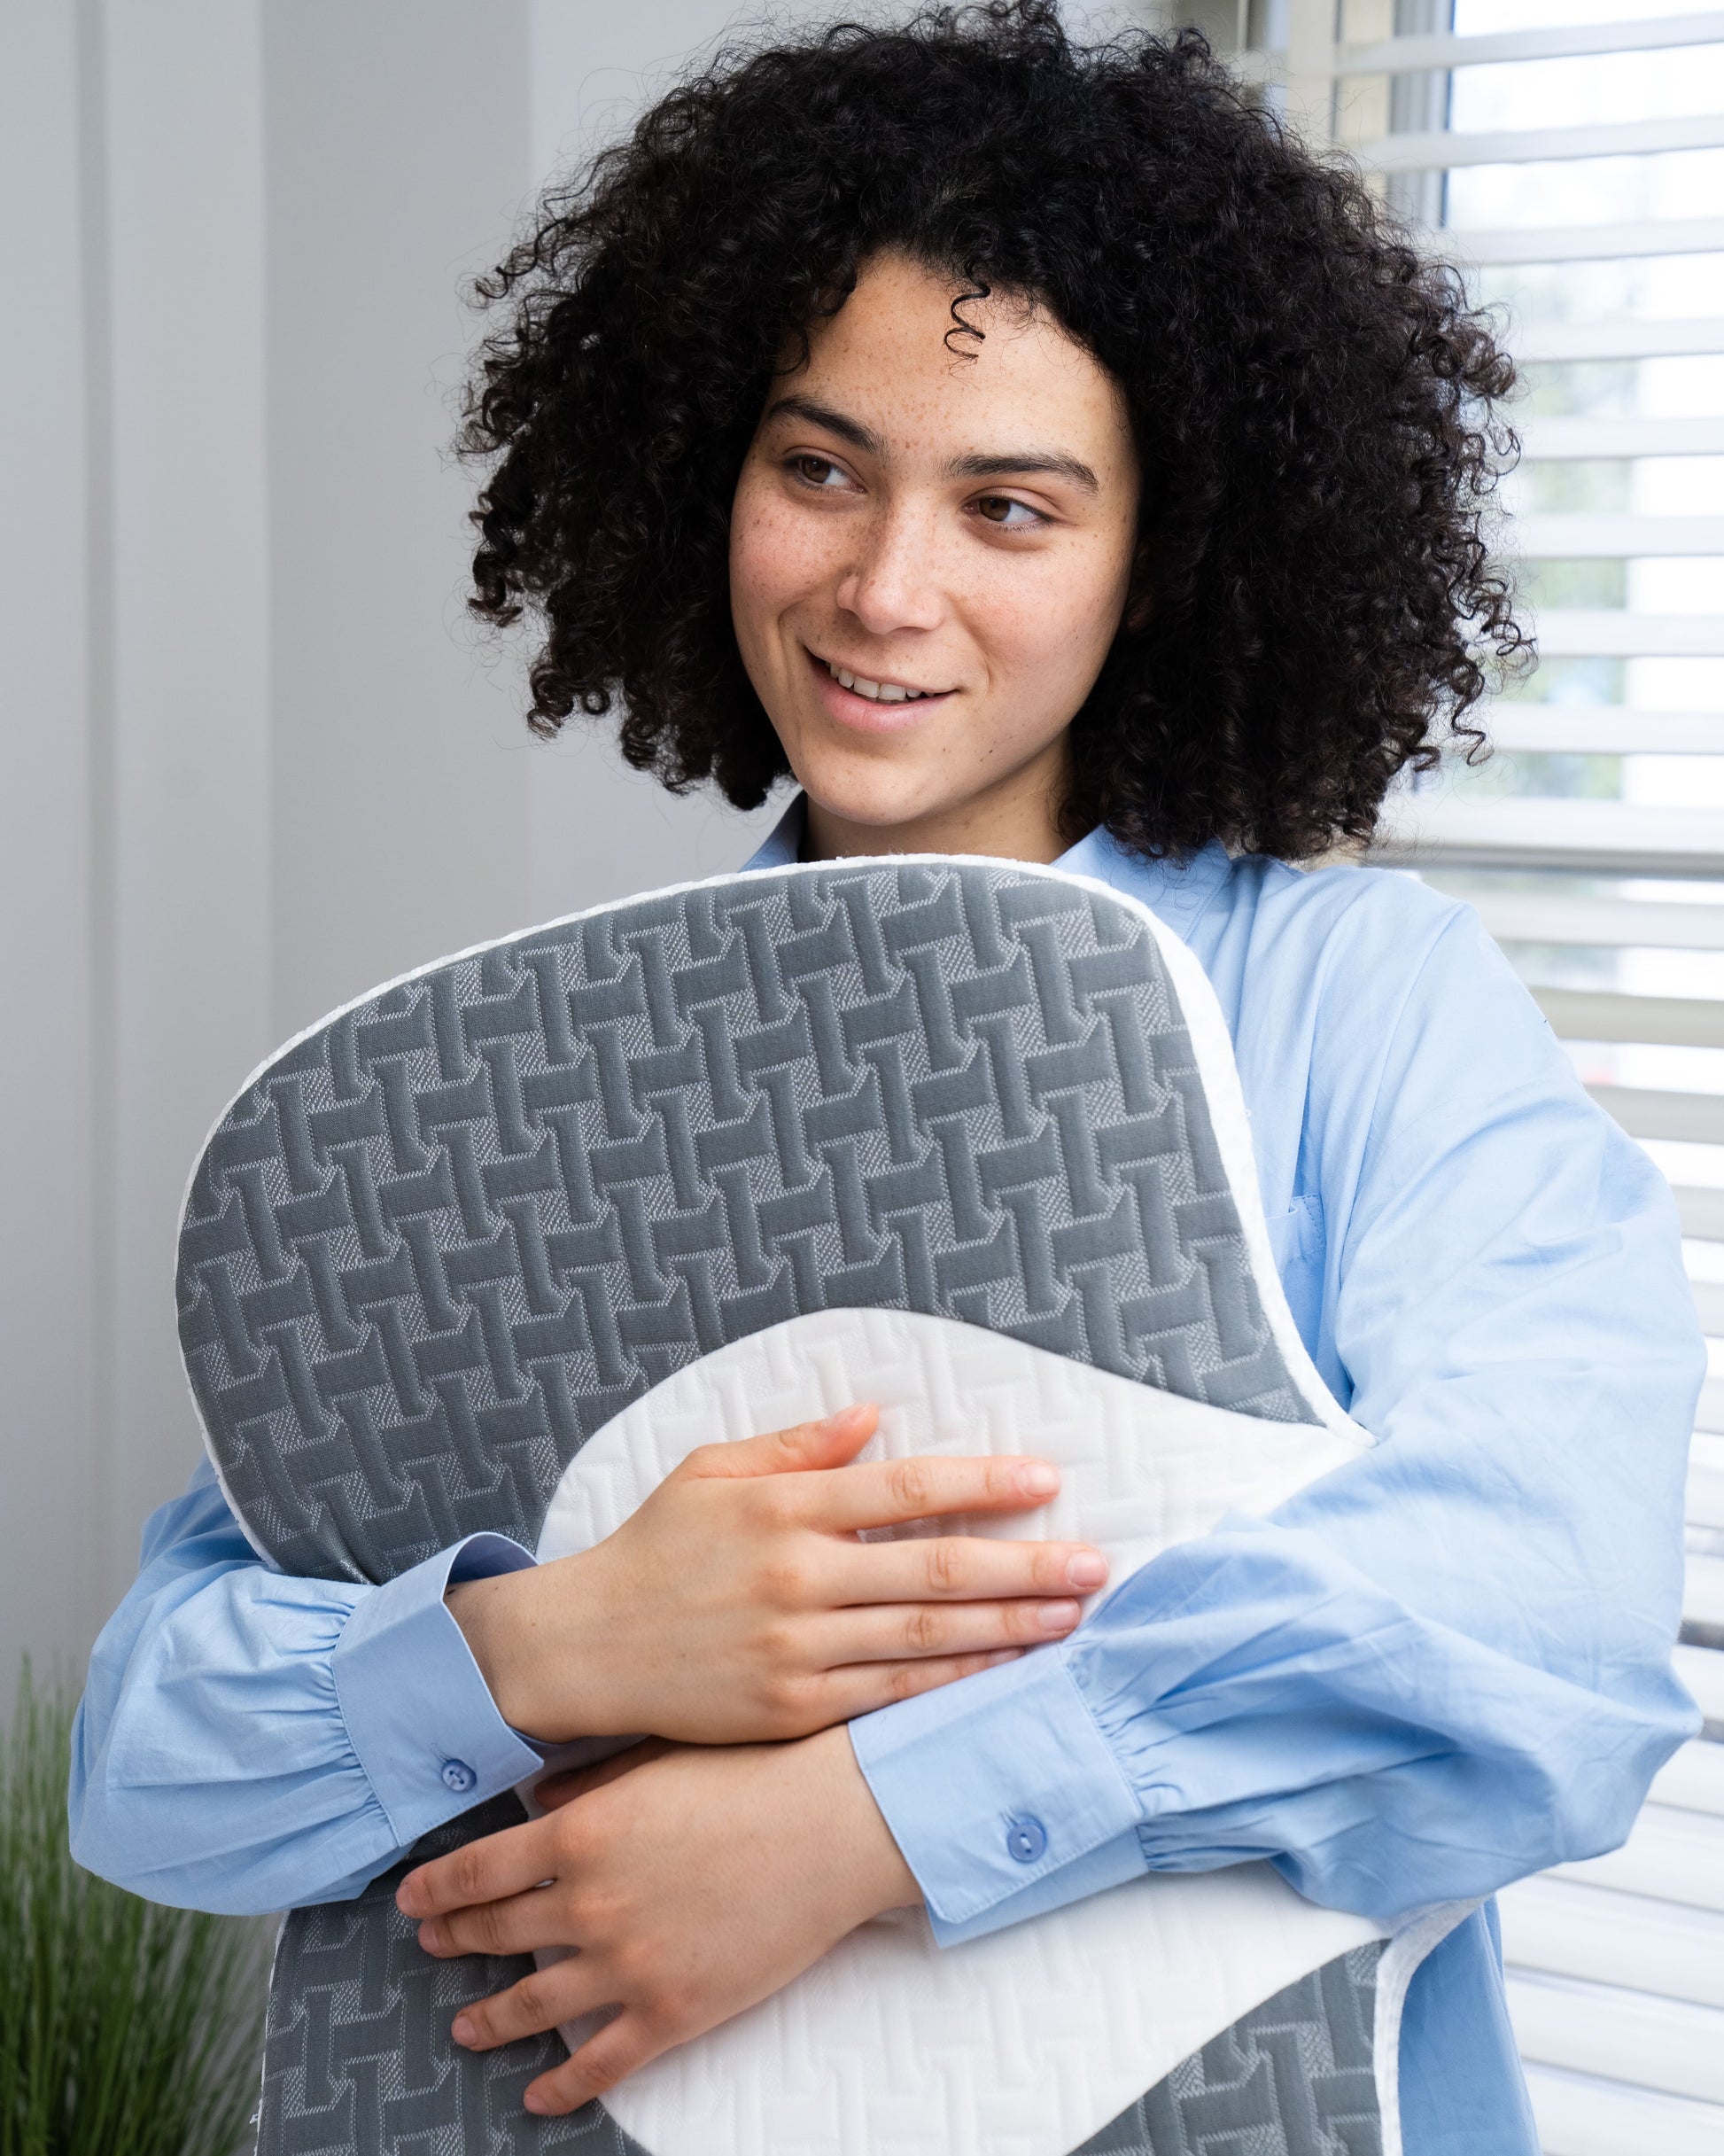 Elviros Knee Pillow for Side Sleepers, Orthopedic Memory Foam Wedge Contour  Leg Pillow, Multi Position Use